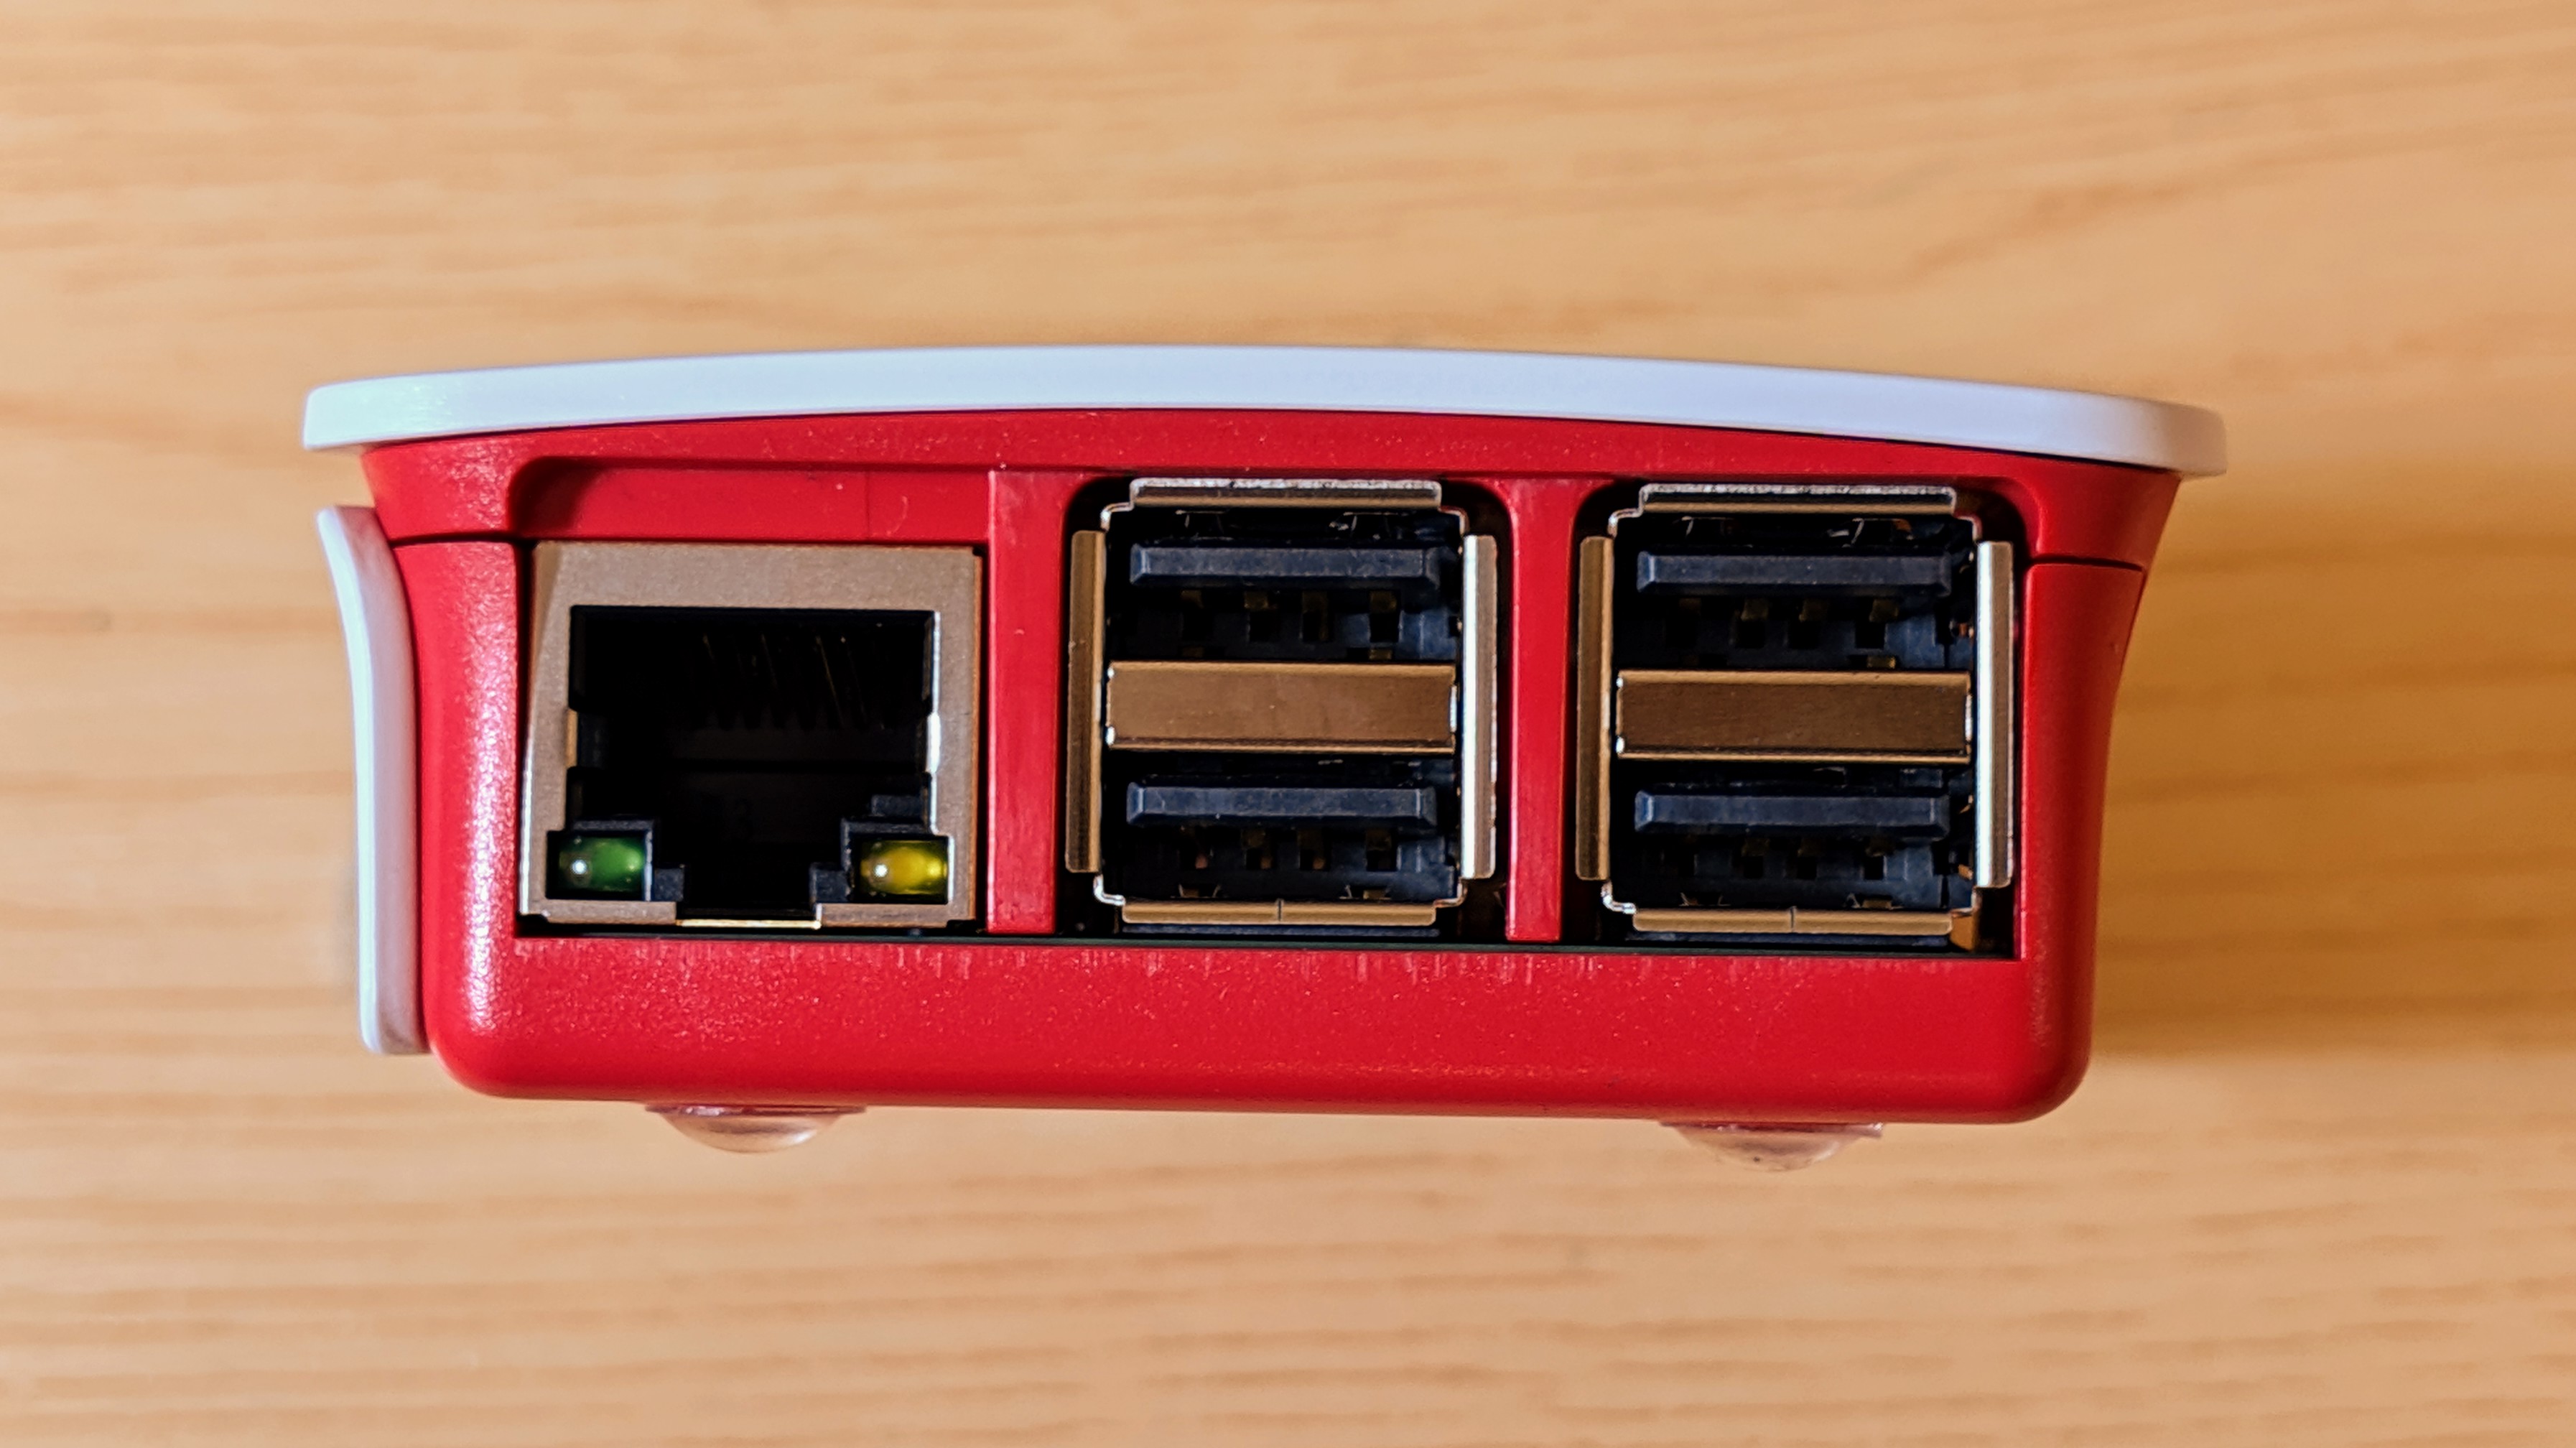 Raspberry Pi 3 Model B+ Ethernet and USB ports